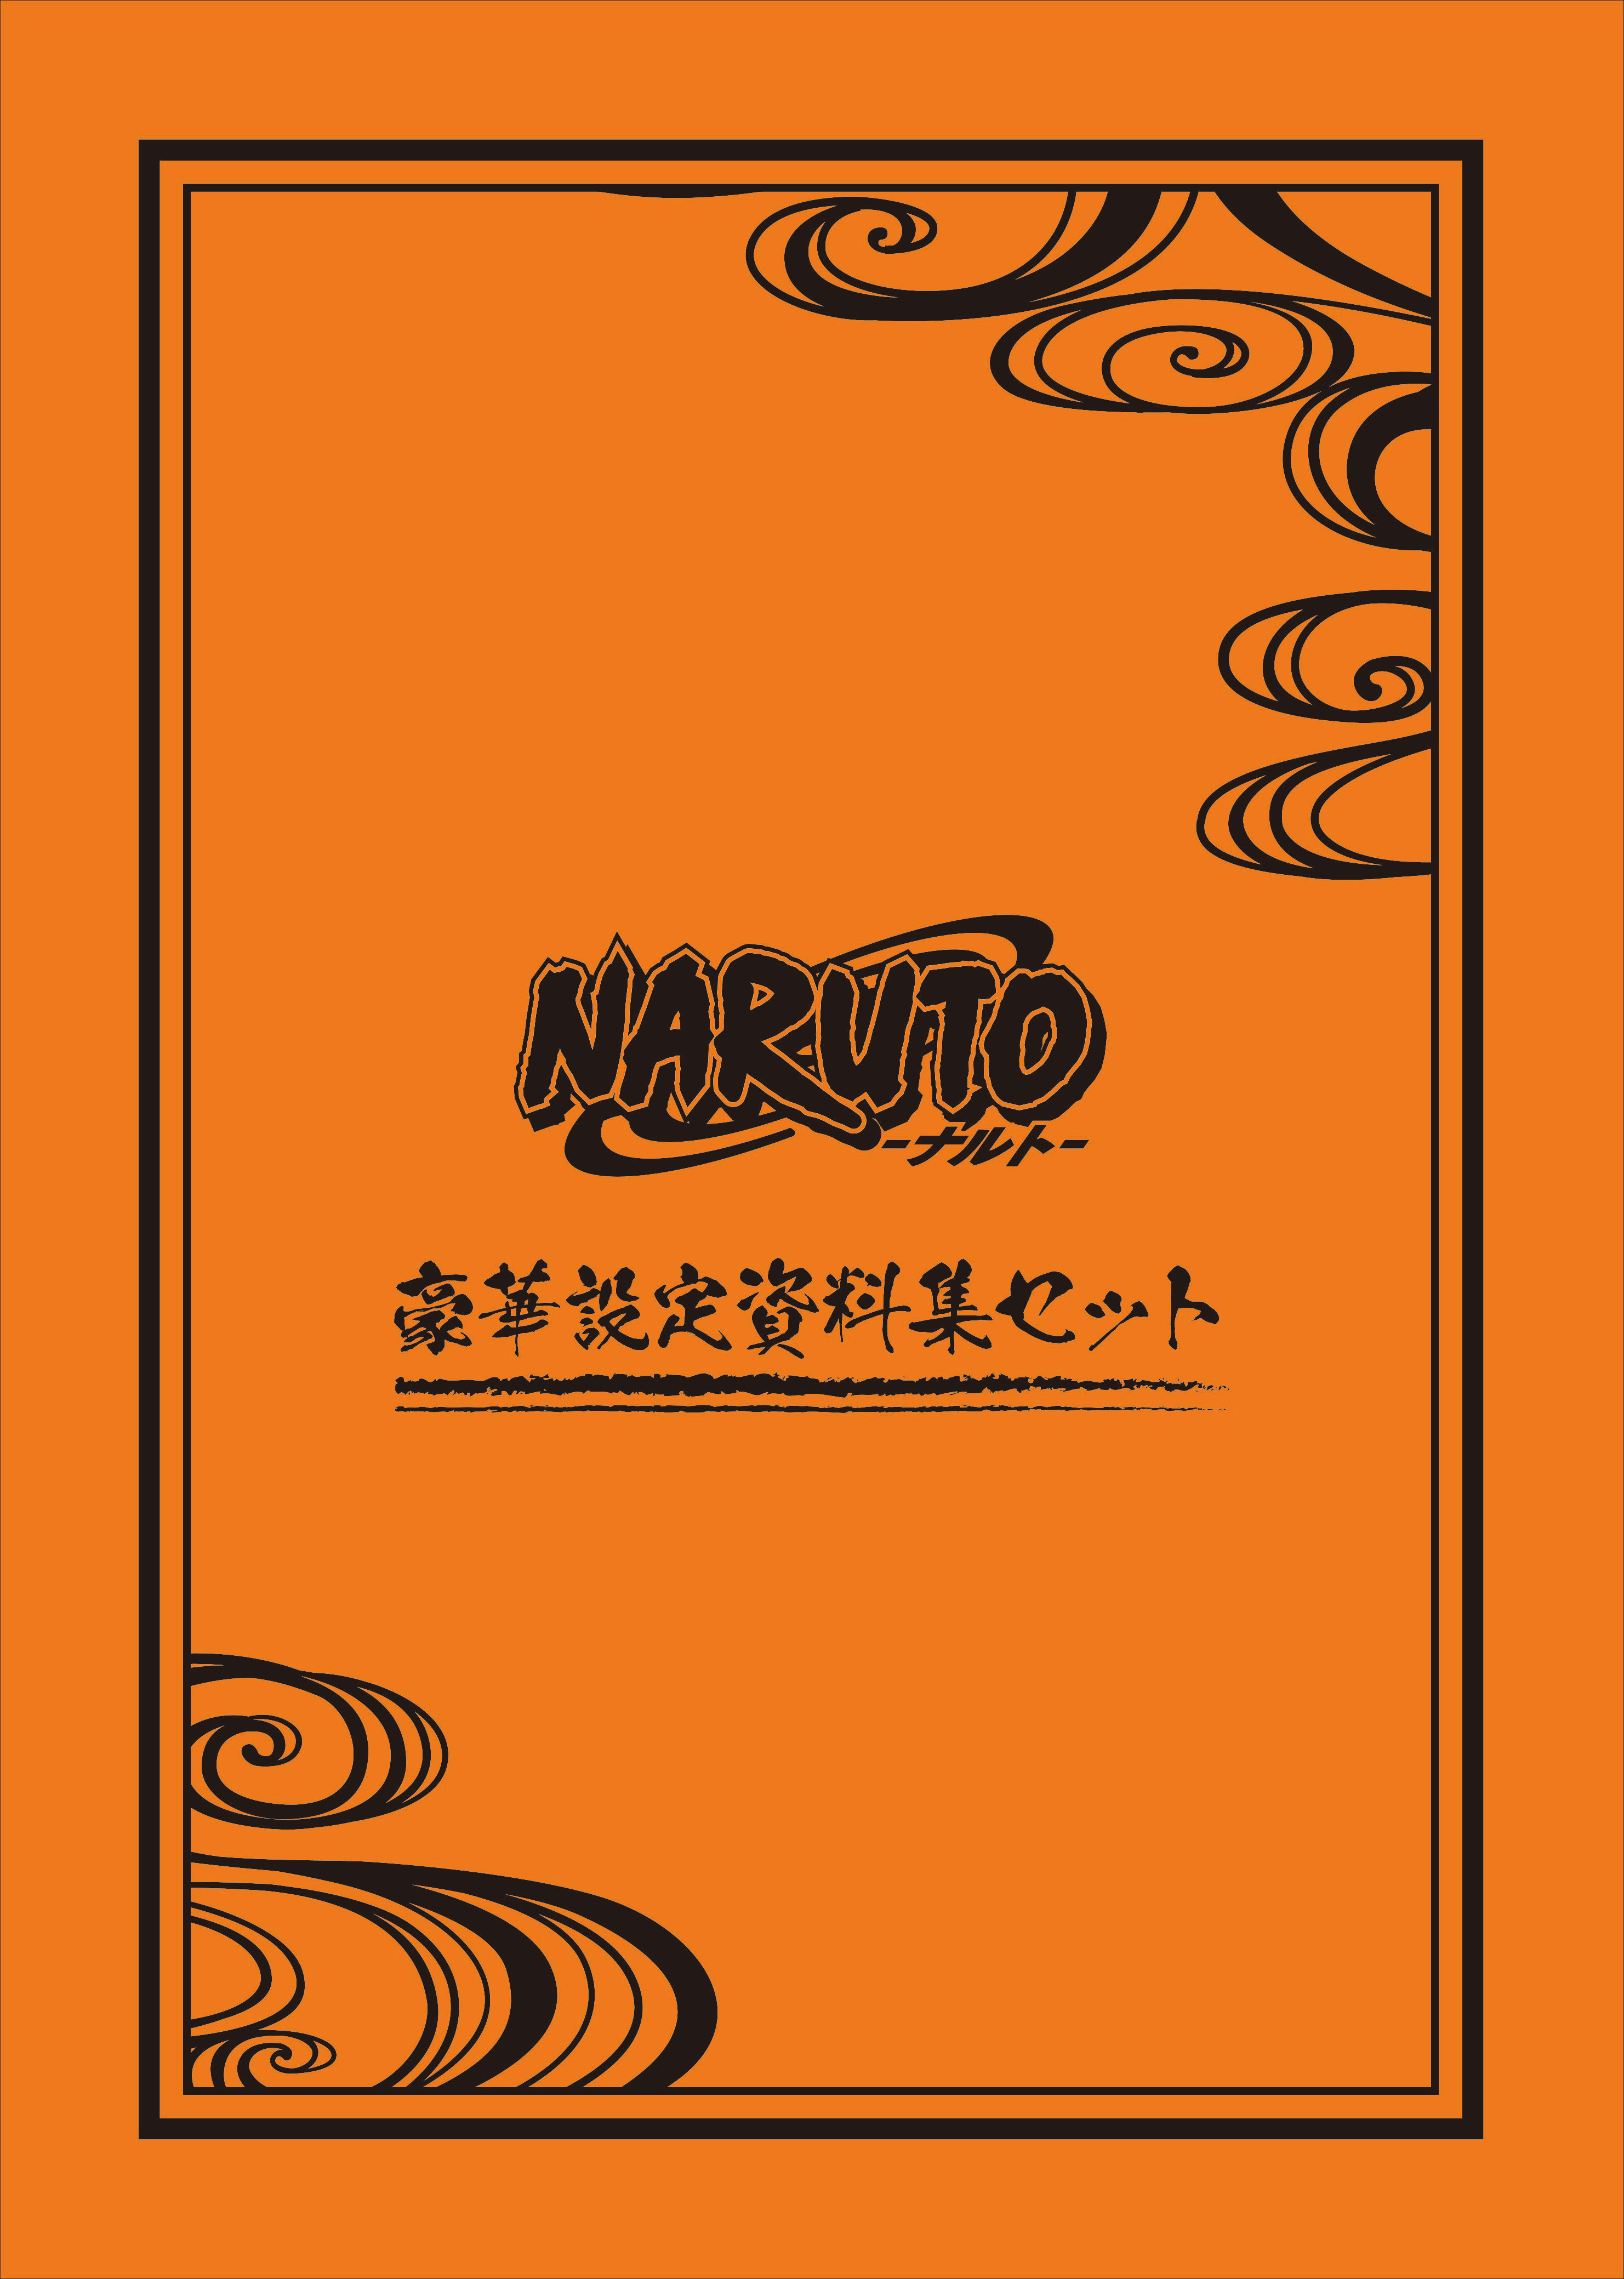 Tvアニメ Naruto ナルト より 豪華設定資料集セットが受注生産商品で発売決定 株式会社アニメイトホールディングスのプレスリリース